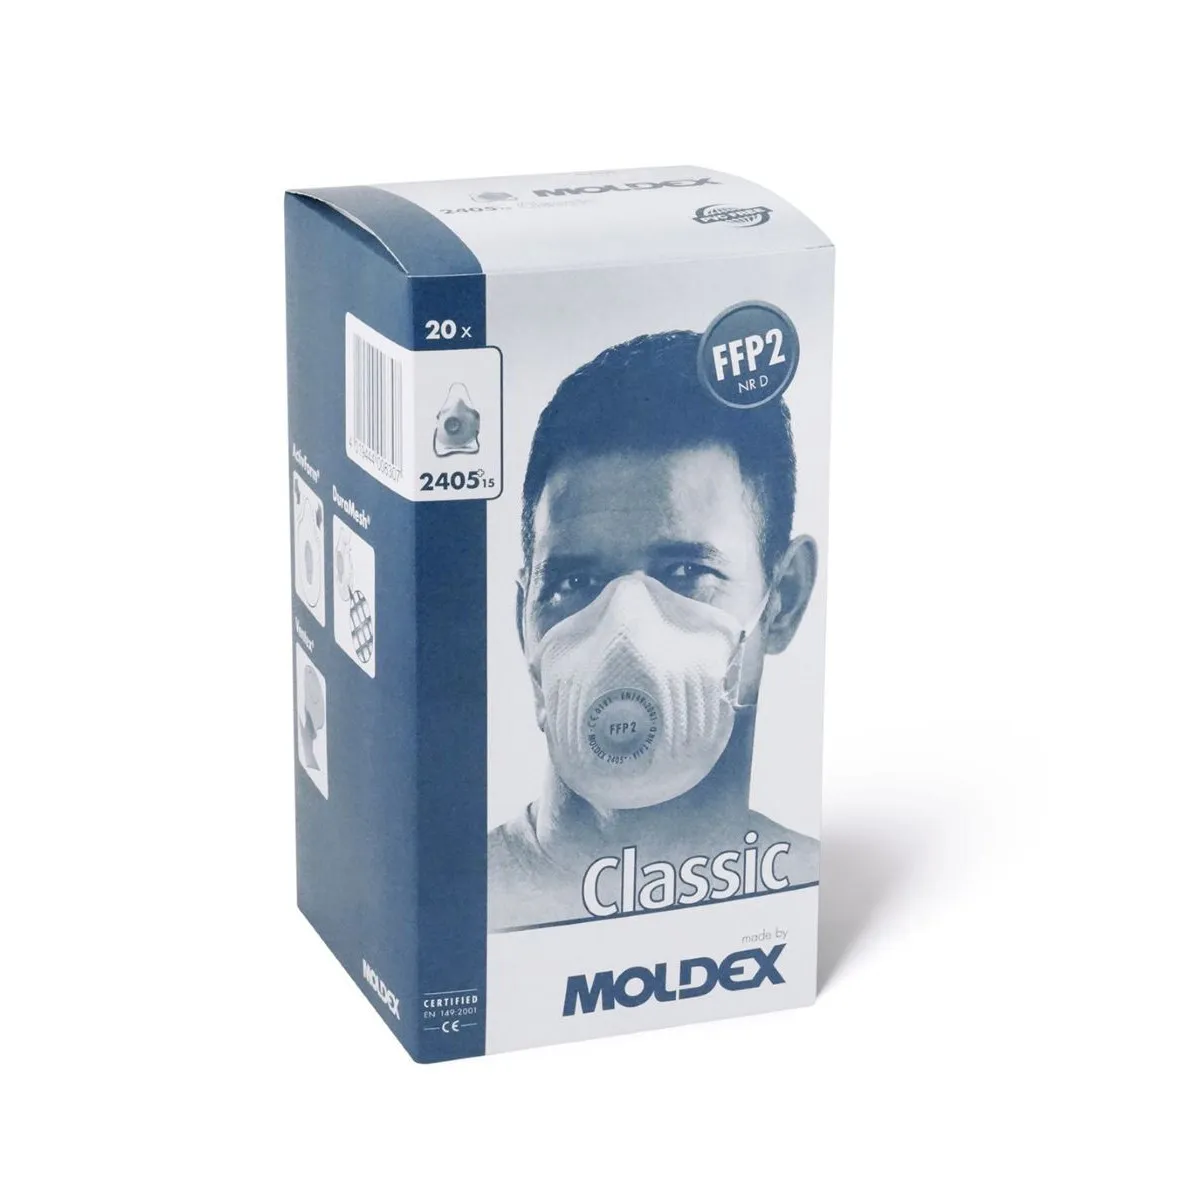 Jednokratne maska FFP2 2405 - Moldex 